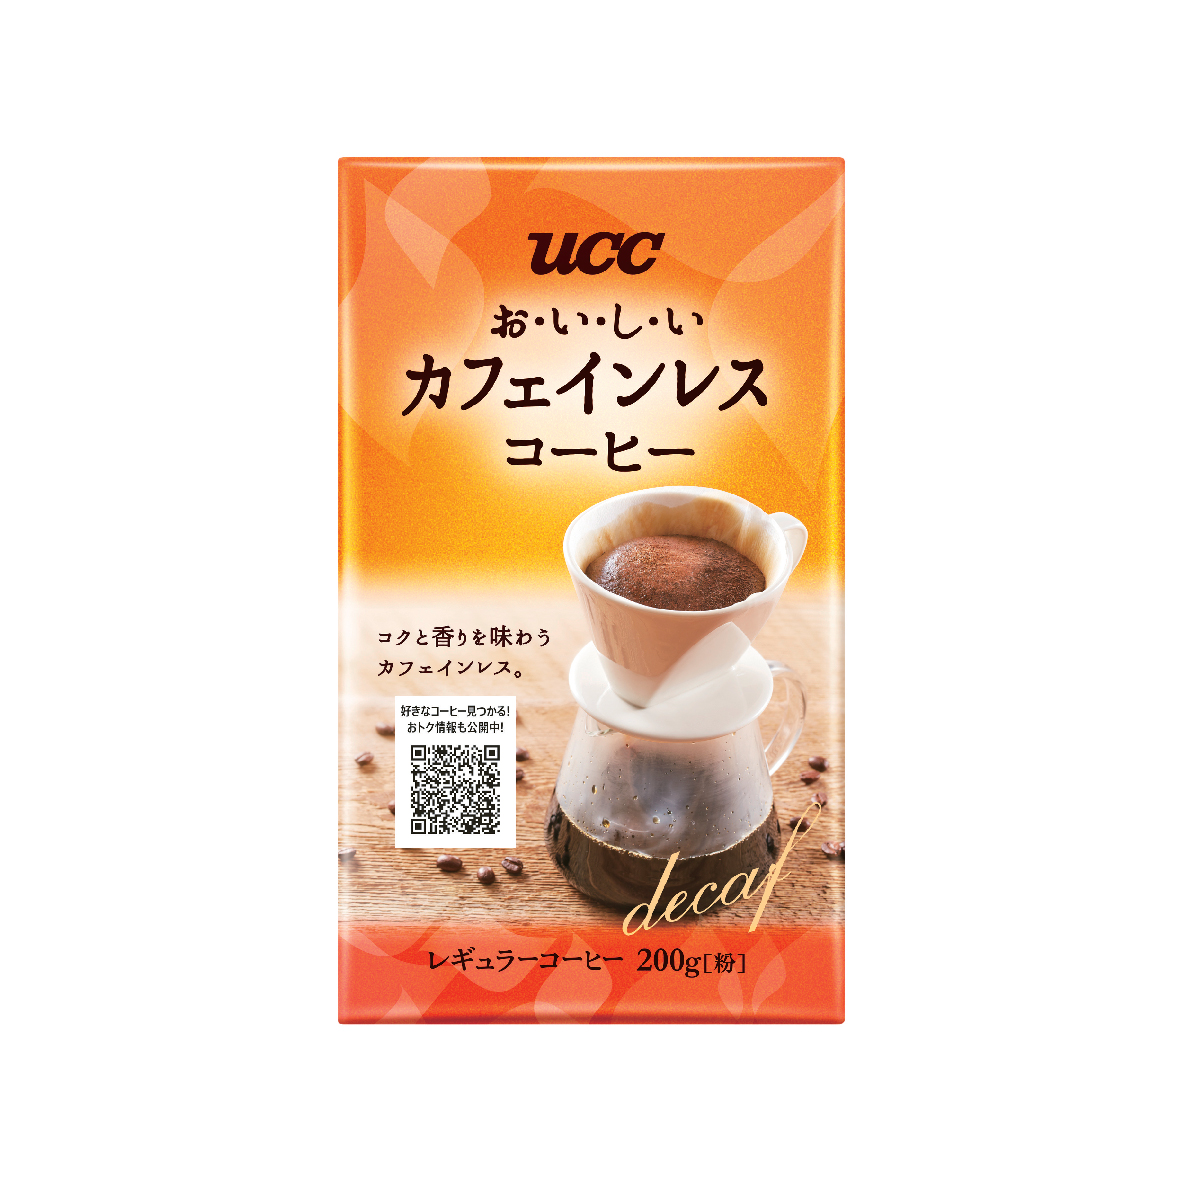 UCC Decaffeinated Roasted Coffee